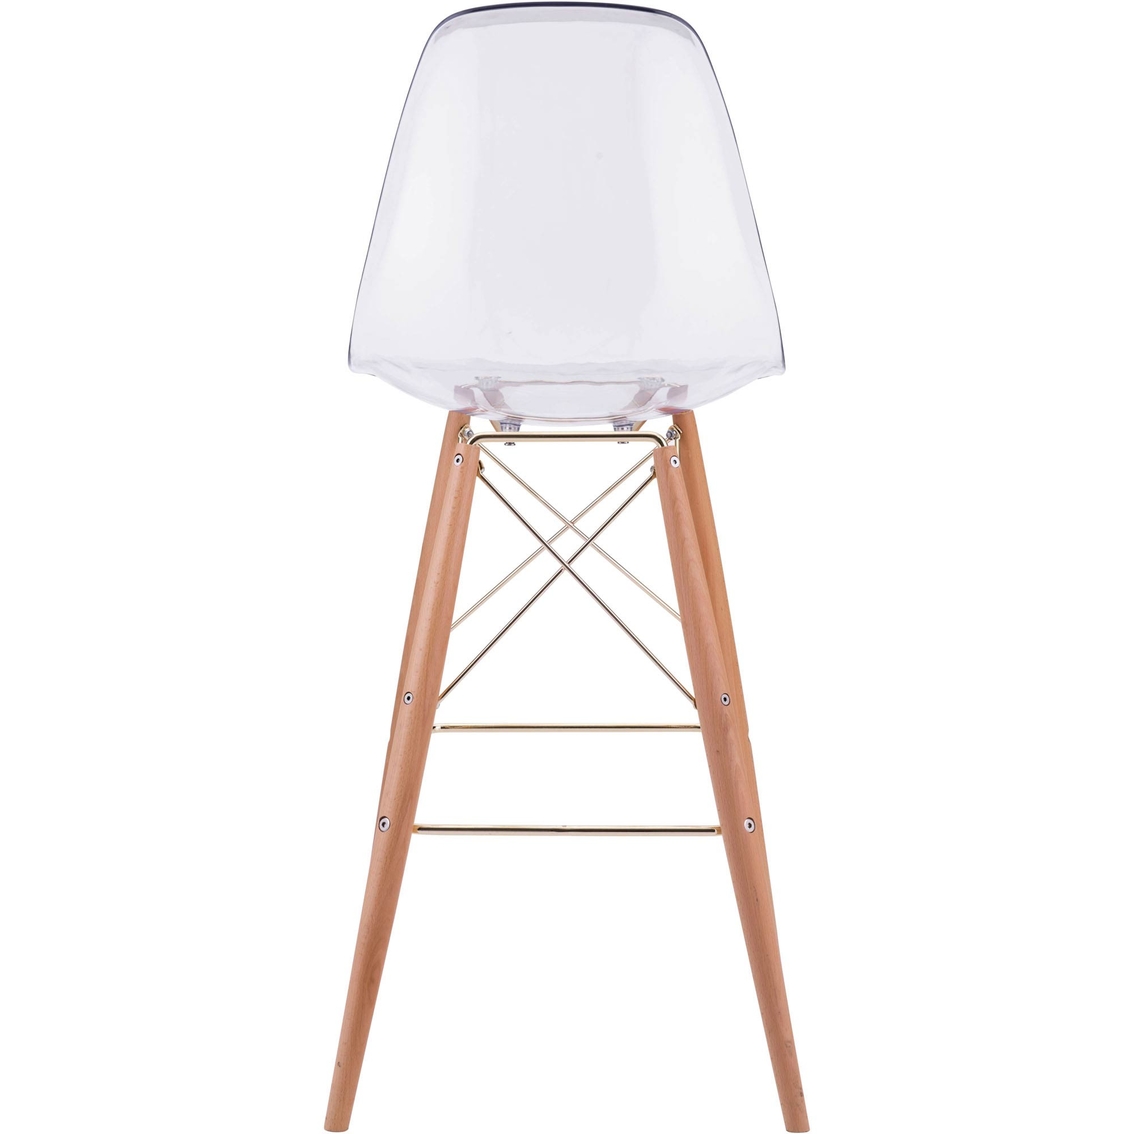 Zuo Modern Shadow Bar Chair - Image 2 of 4